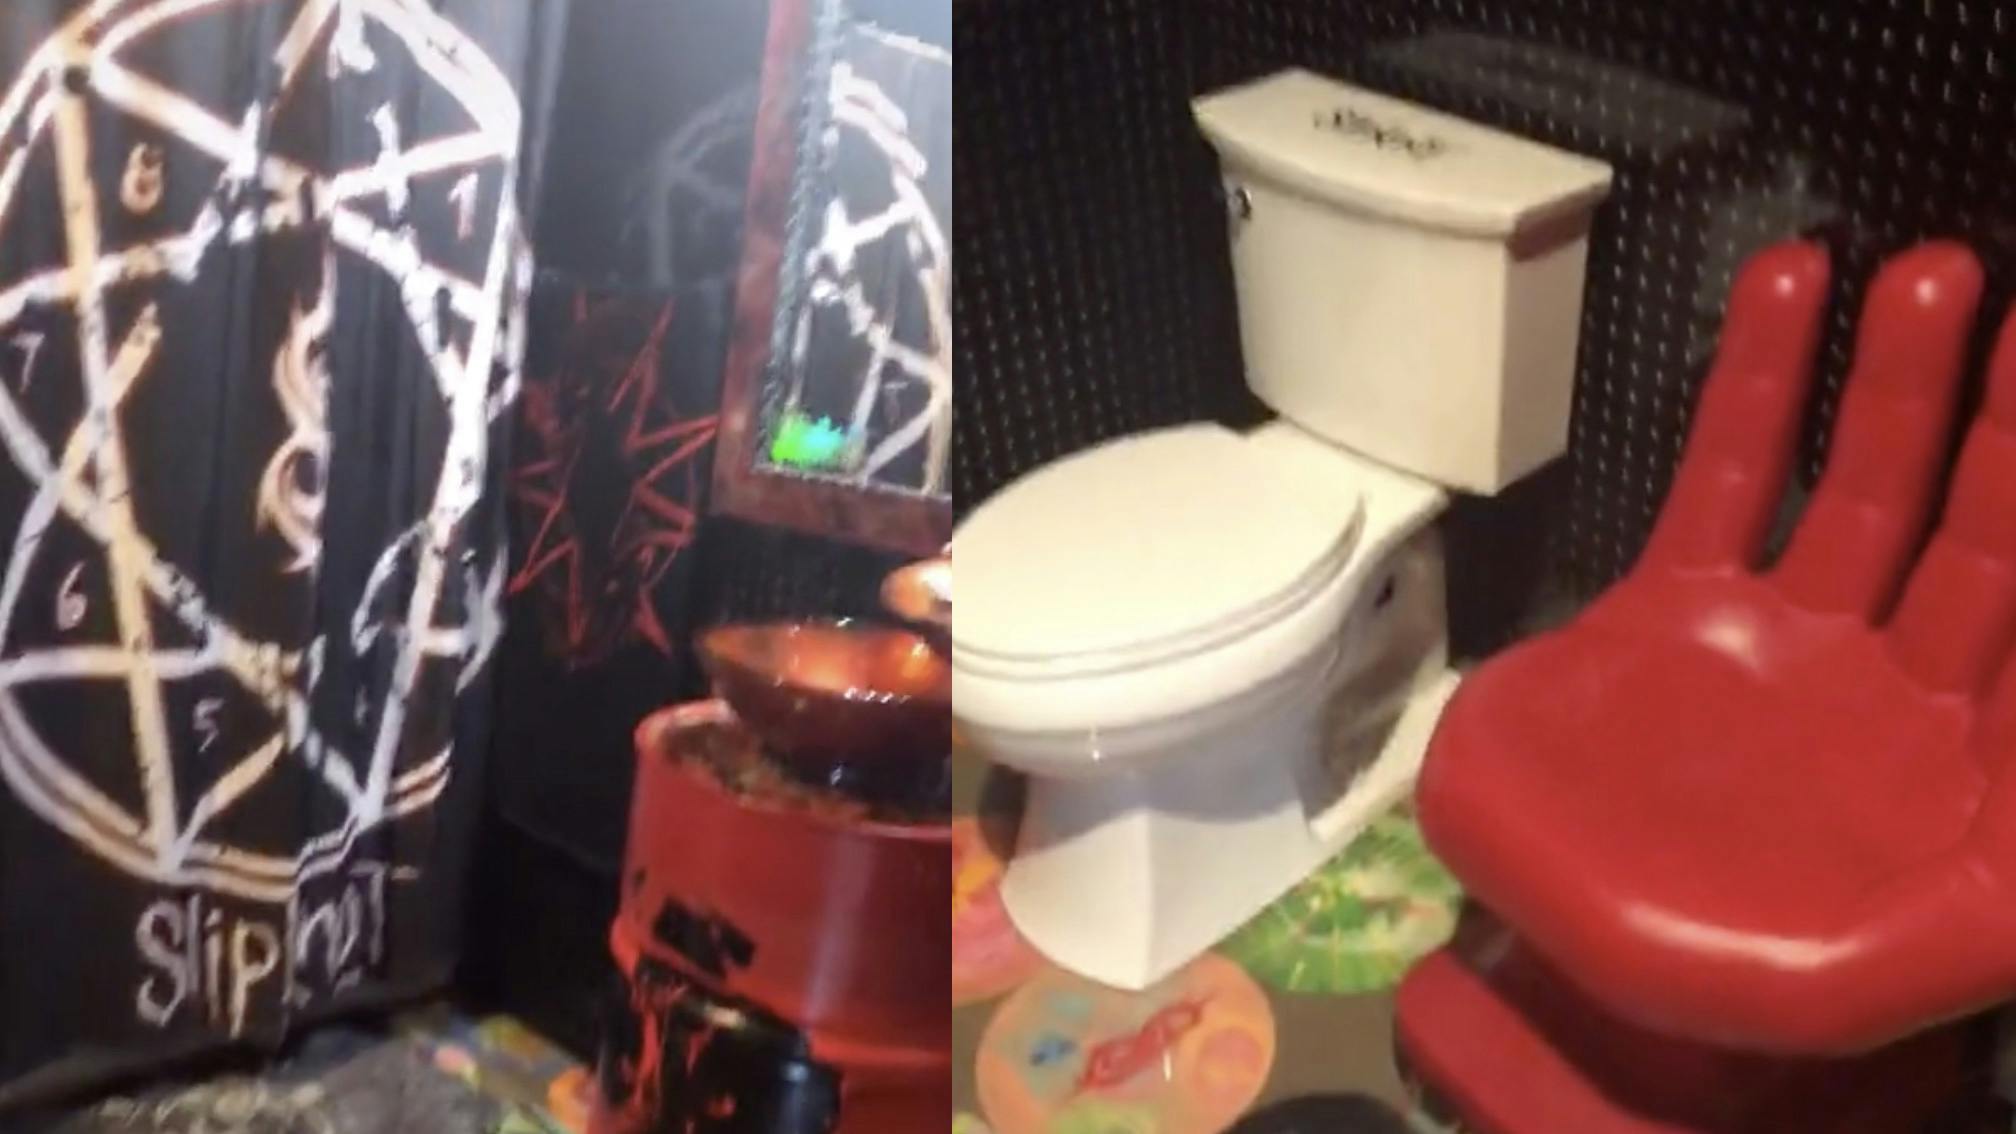 This Awesome Mum Built A Slipknot-Themed Bathroom